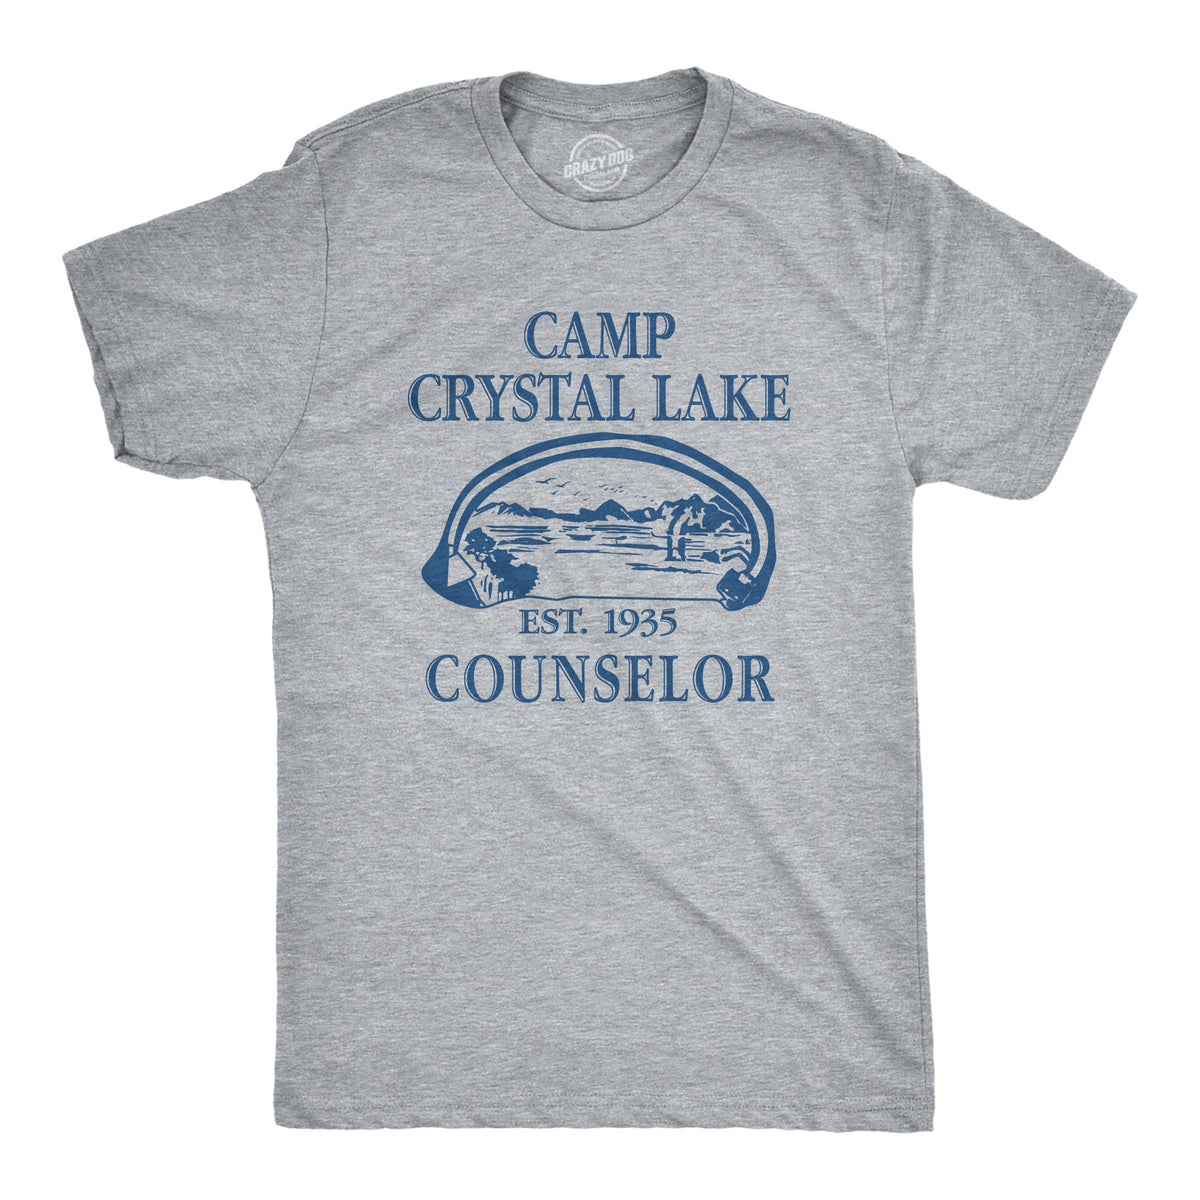 Funny Light Heather Grey Camp Crystal Lake Mens T Shirt Nerdy Halloween Tee